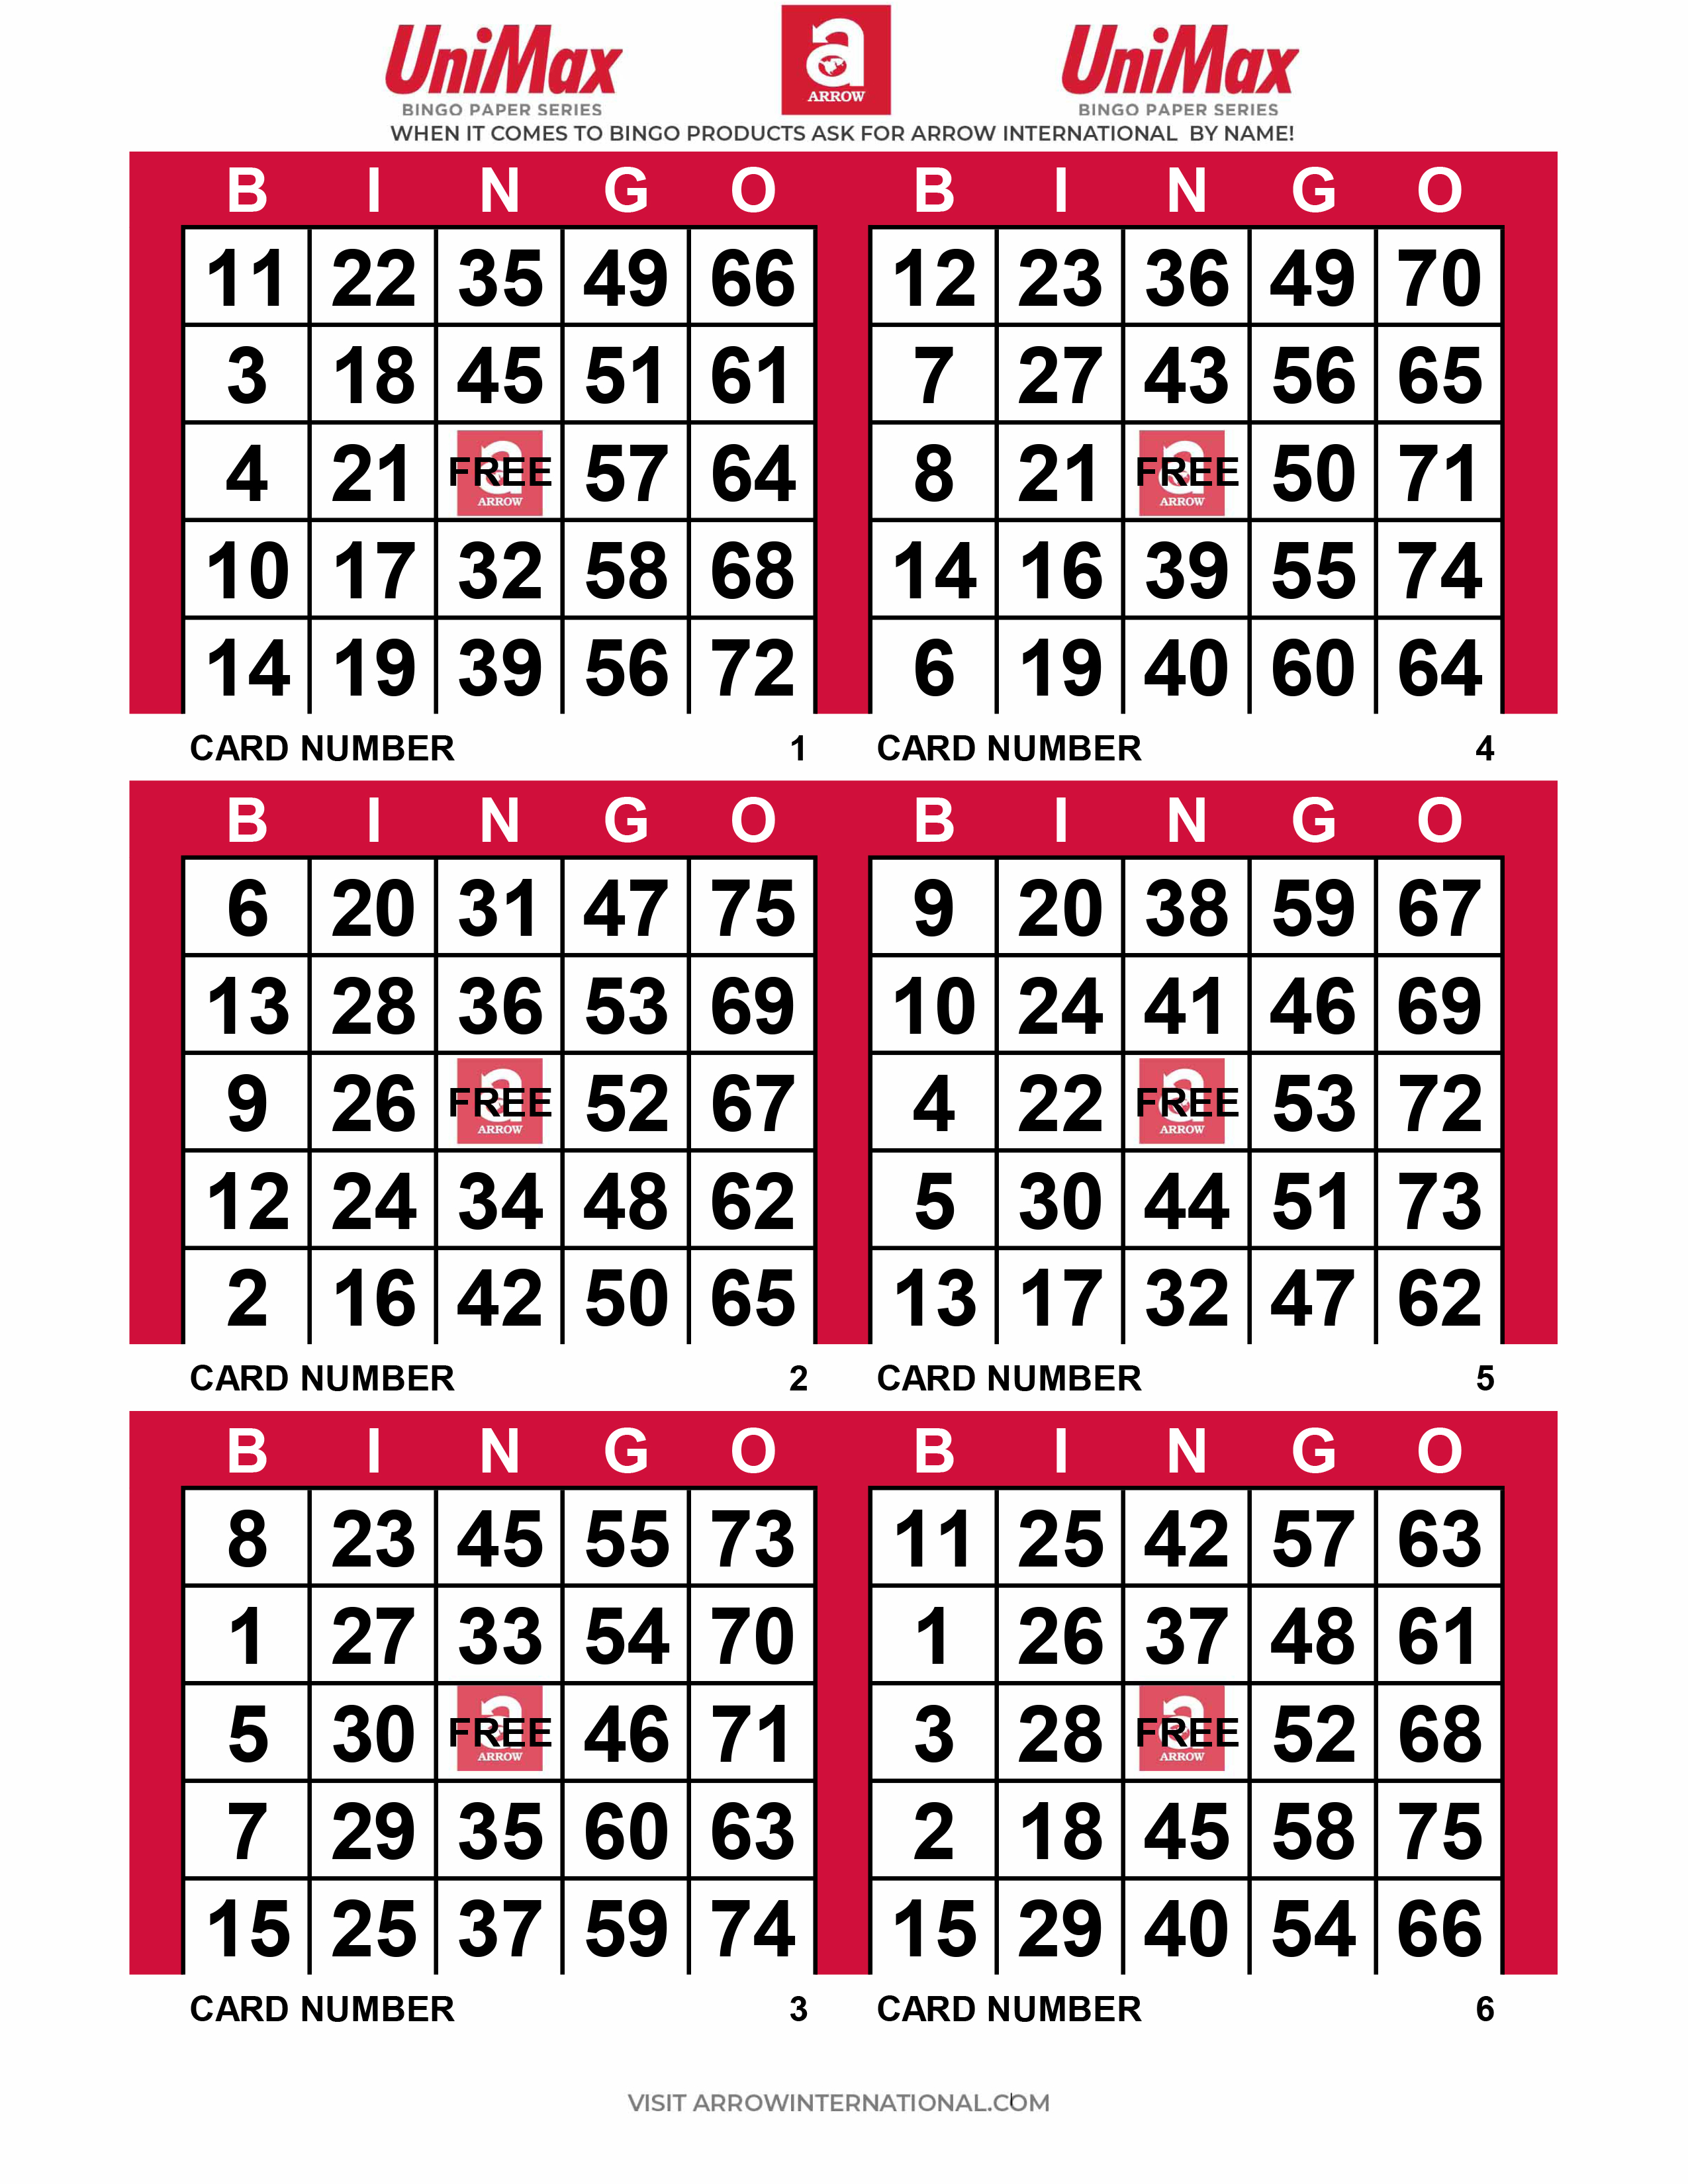 bingo card set up